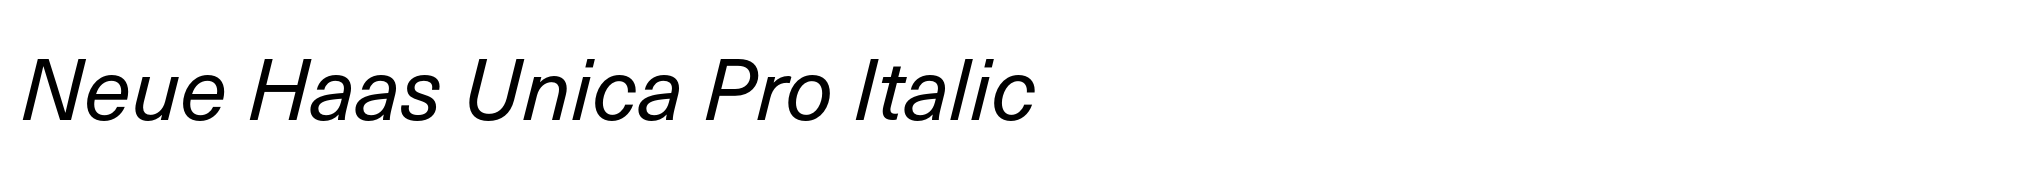 Neue Haas Unica Pro Italic image